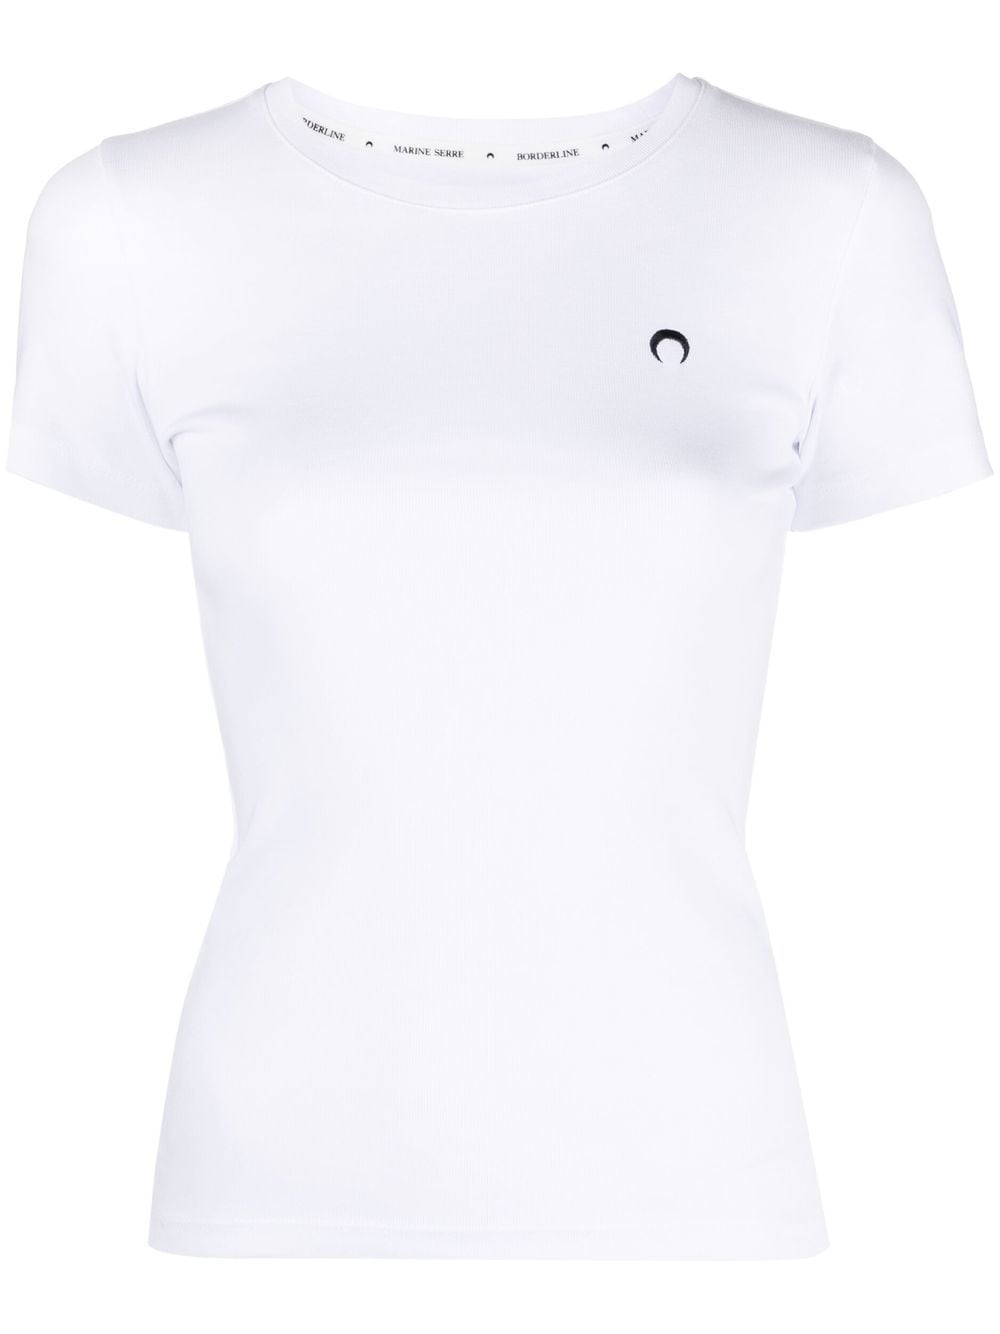 Marine Serre Crescent Moon organic cotton T-shirt - White